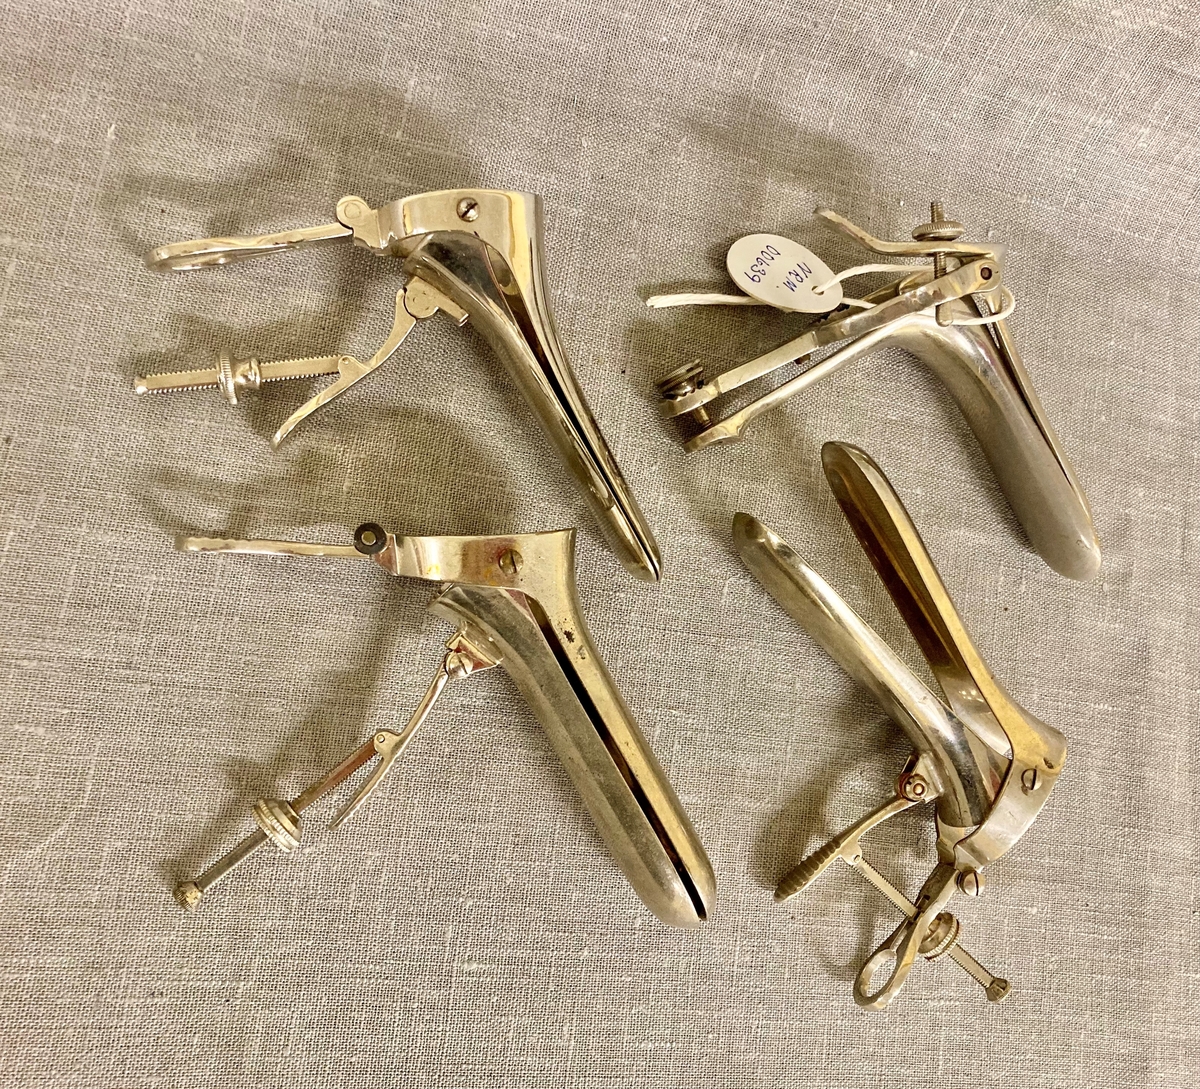 4 stk. vaginalspeculum
3 stk. sakser / oprasjonsinstrumenter
3 stk. sprøyter
1 stk. bladholder for operasjonskniv
1 stk. jordmorstetoskop